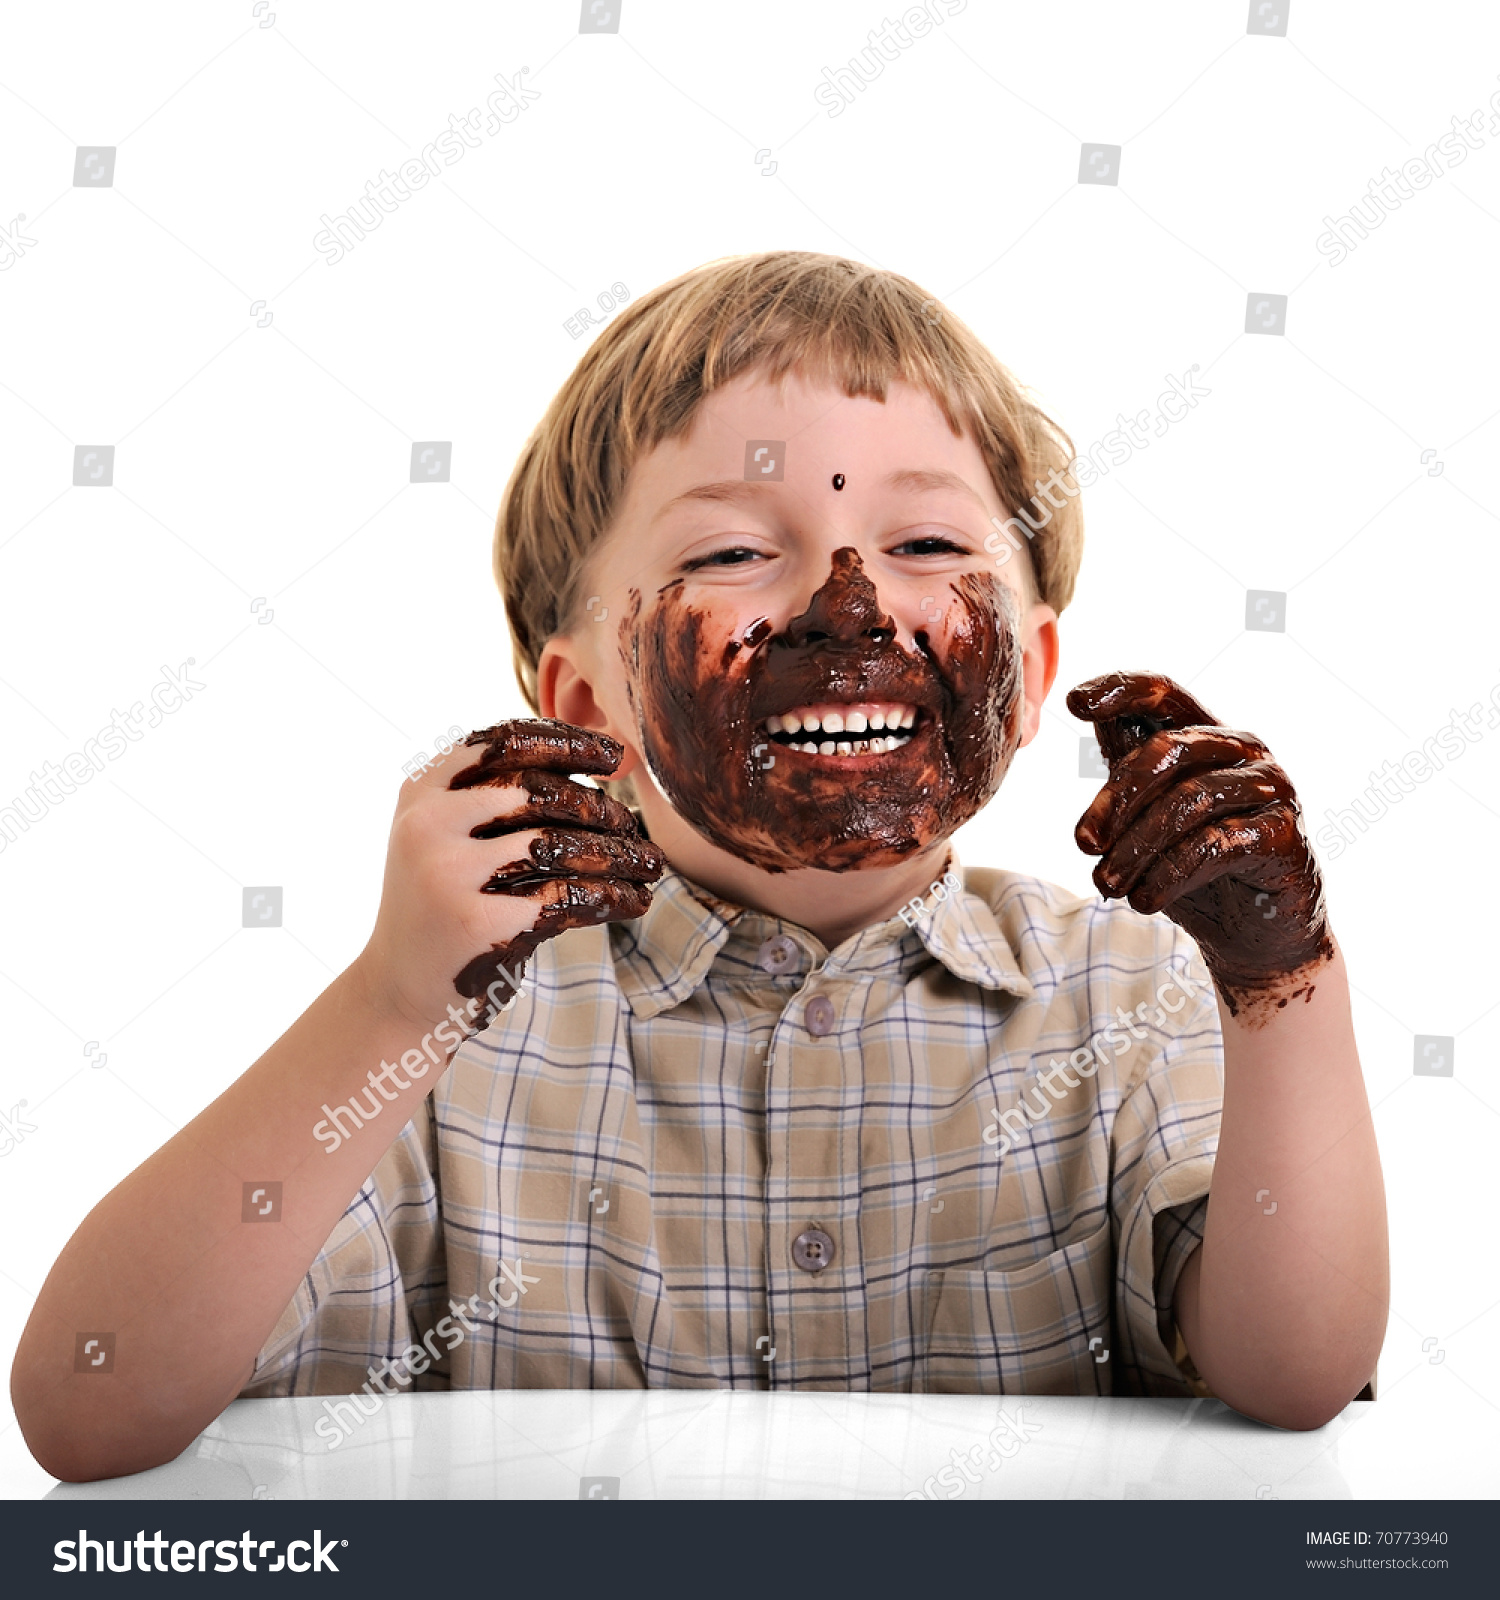 Funny Cute Dirty Bedaubed Boy Chocolate: стоковая фотография (редактировать...